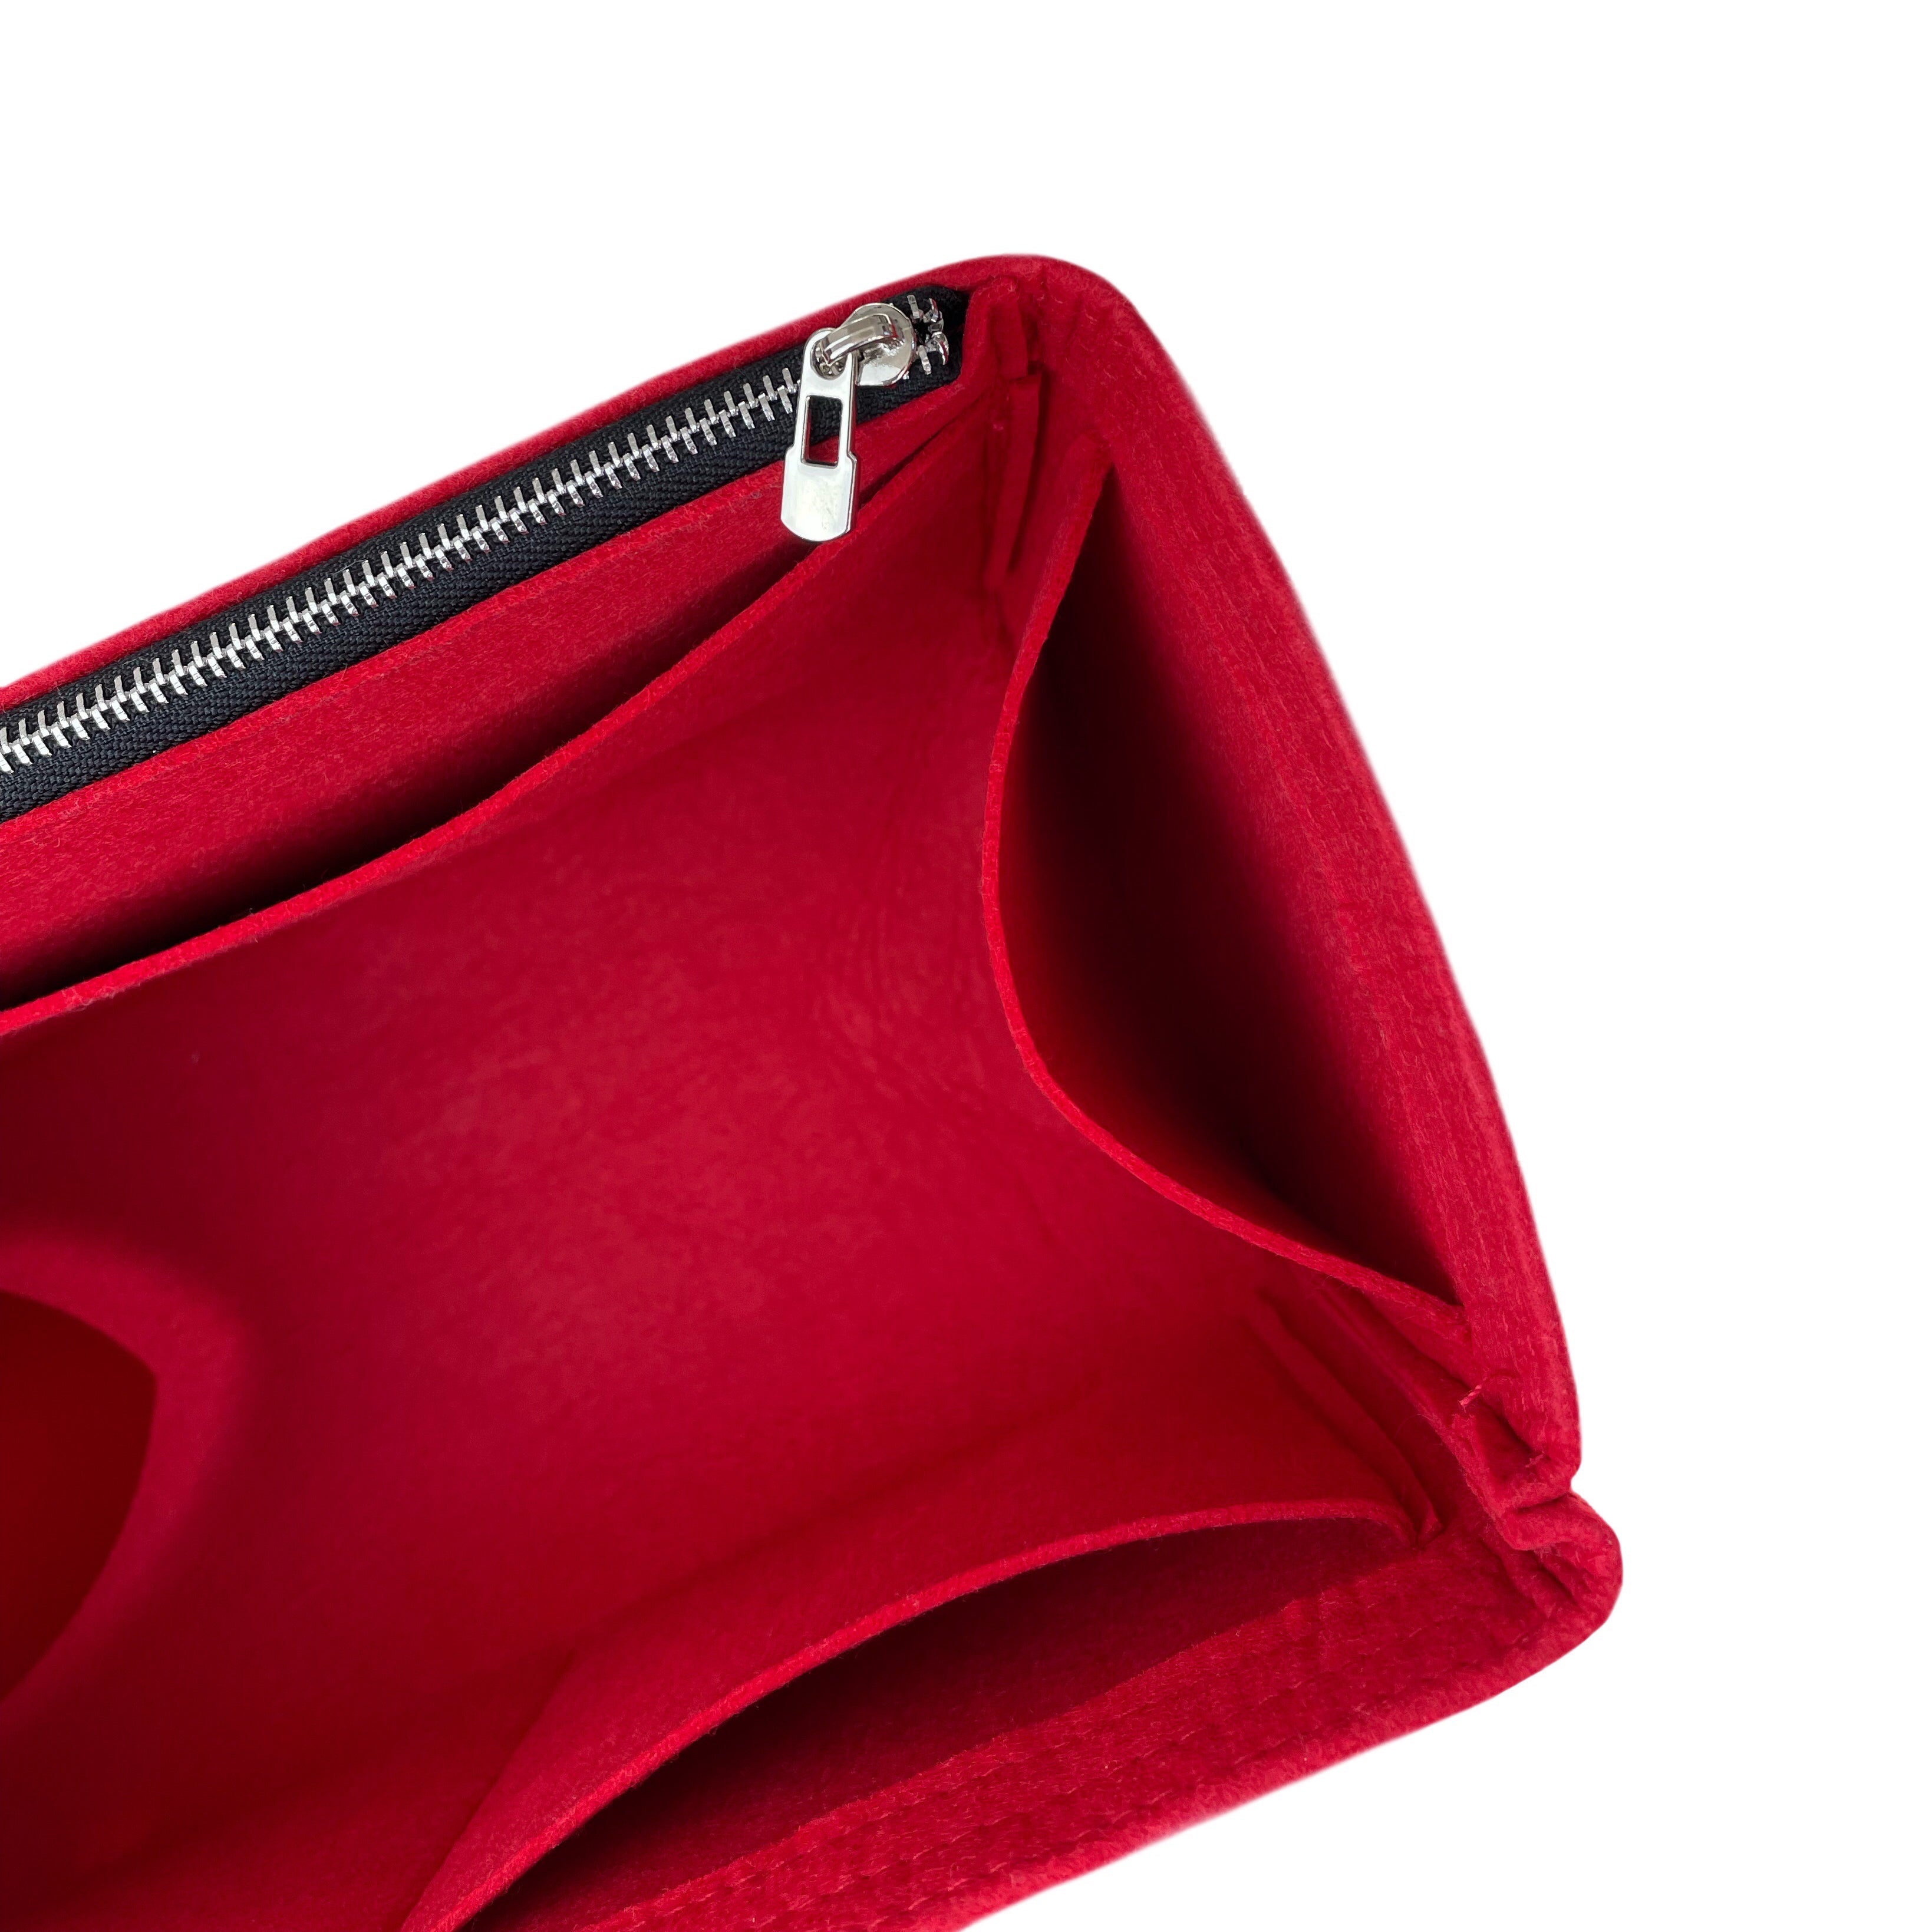 BaginBag | Handbag Organizer For Chanel Deauville Bag | Chanel Purse Insert | Bag Liner | Chanel Insert Organizer | Chanel Organizer | Chanel Inner Bag | Luxury bag | Chanel Bag protector | Chanel bag Insert